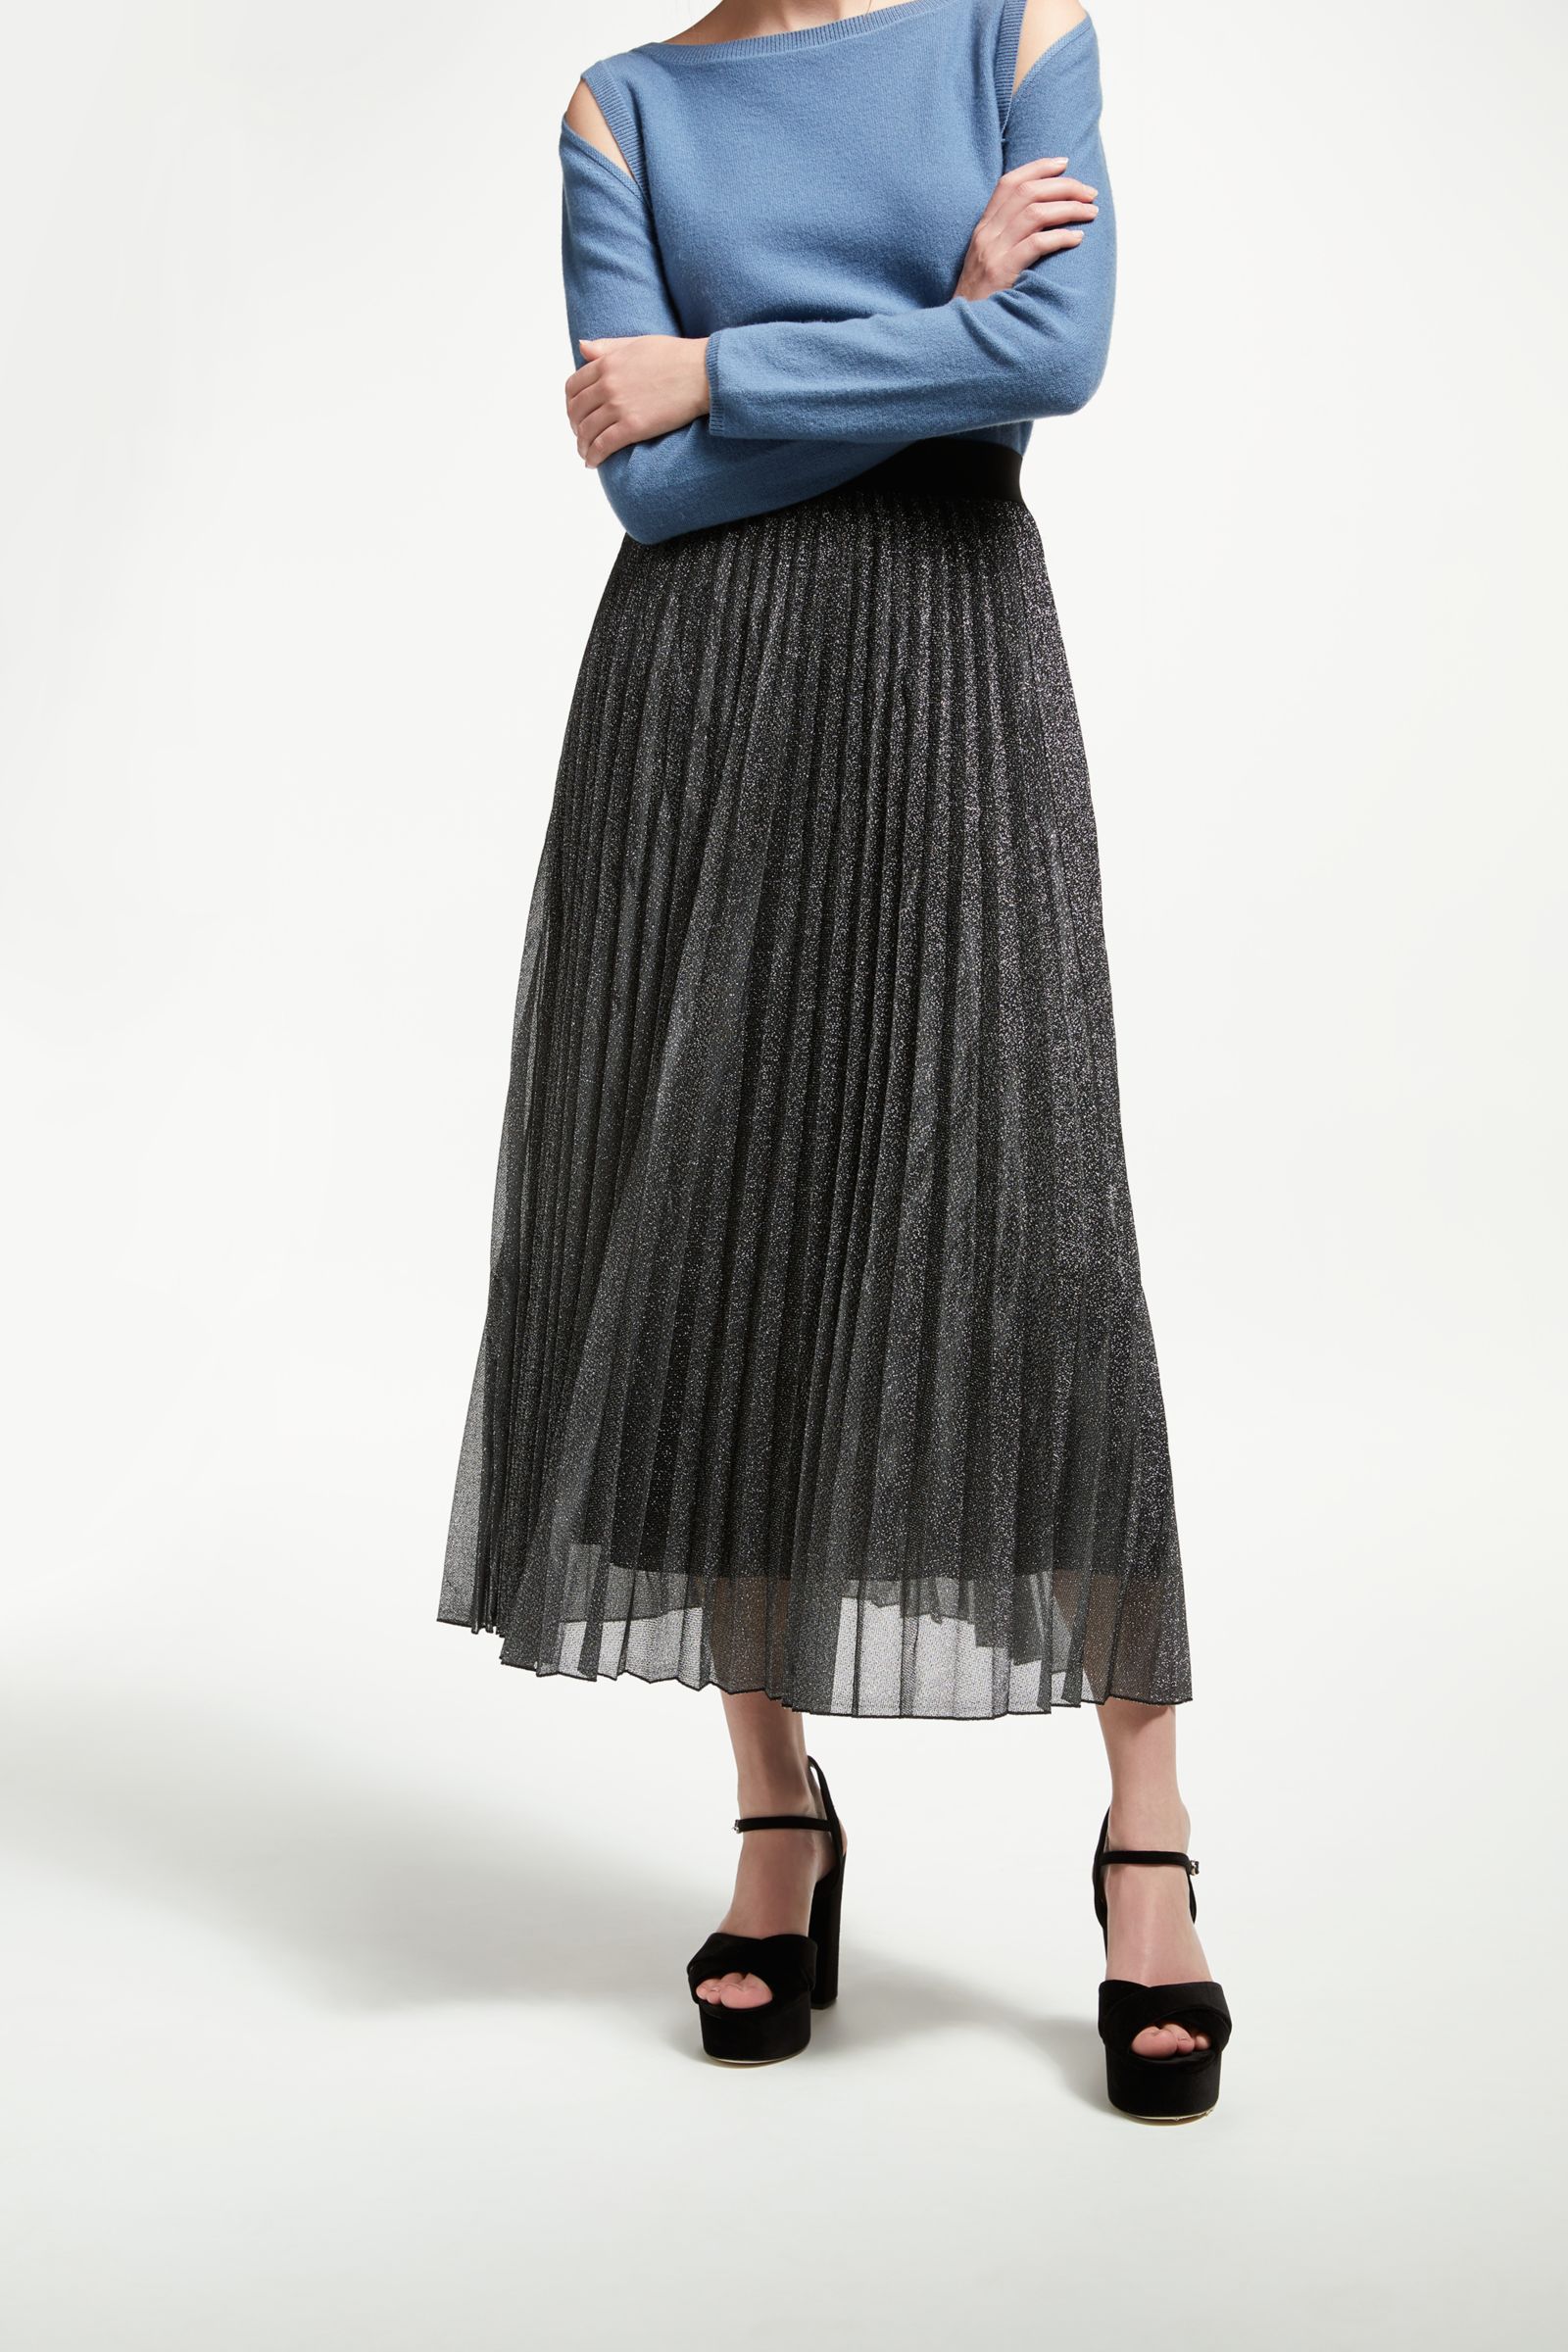 Marella Empoli Pleated Glitter Skirt, Dark Grey at John Lewis & Partners